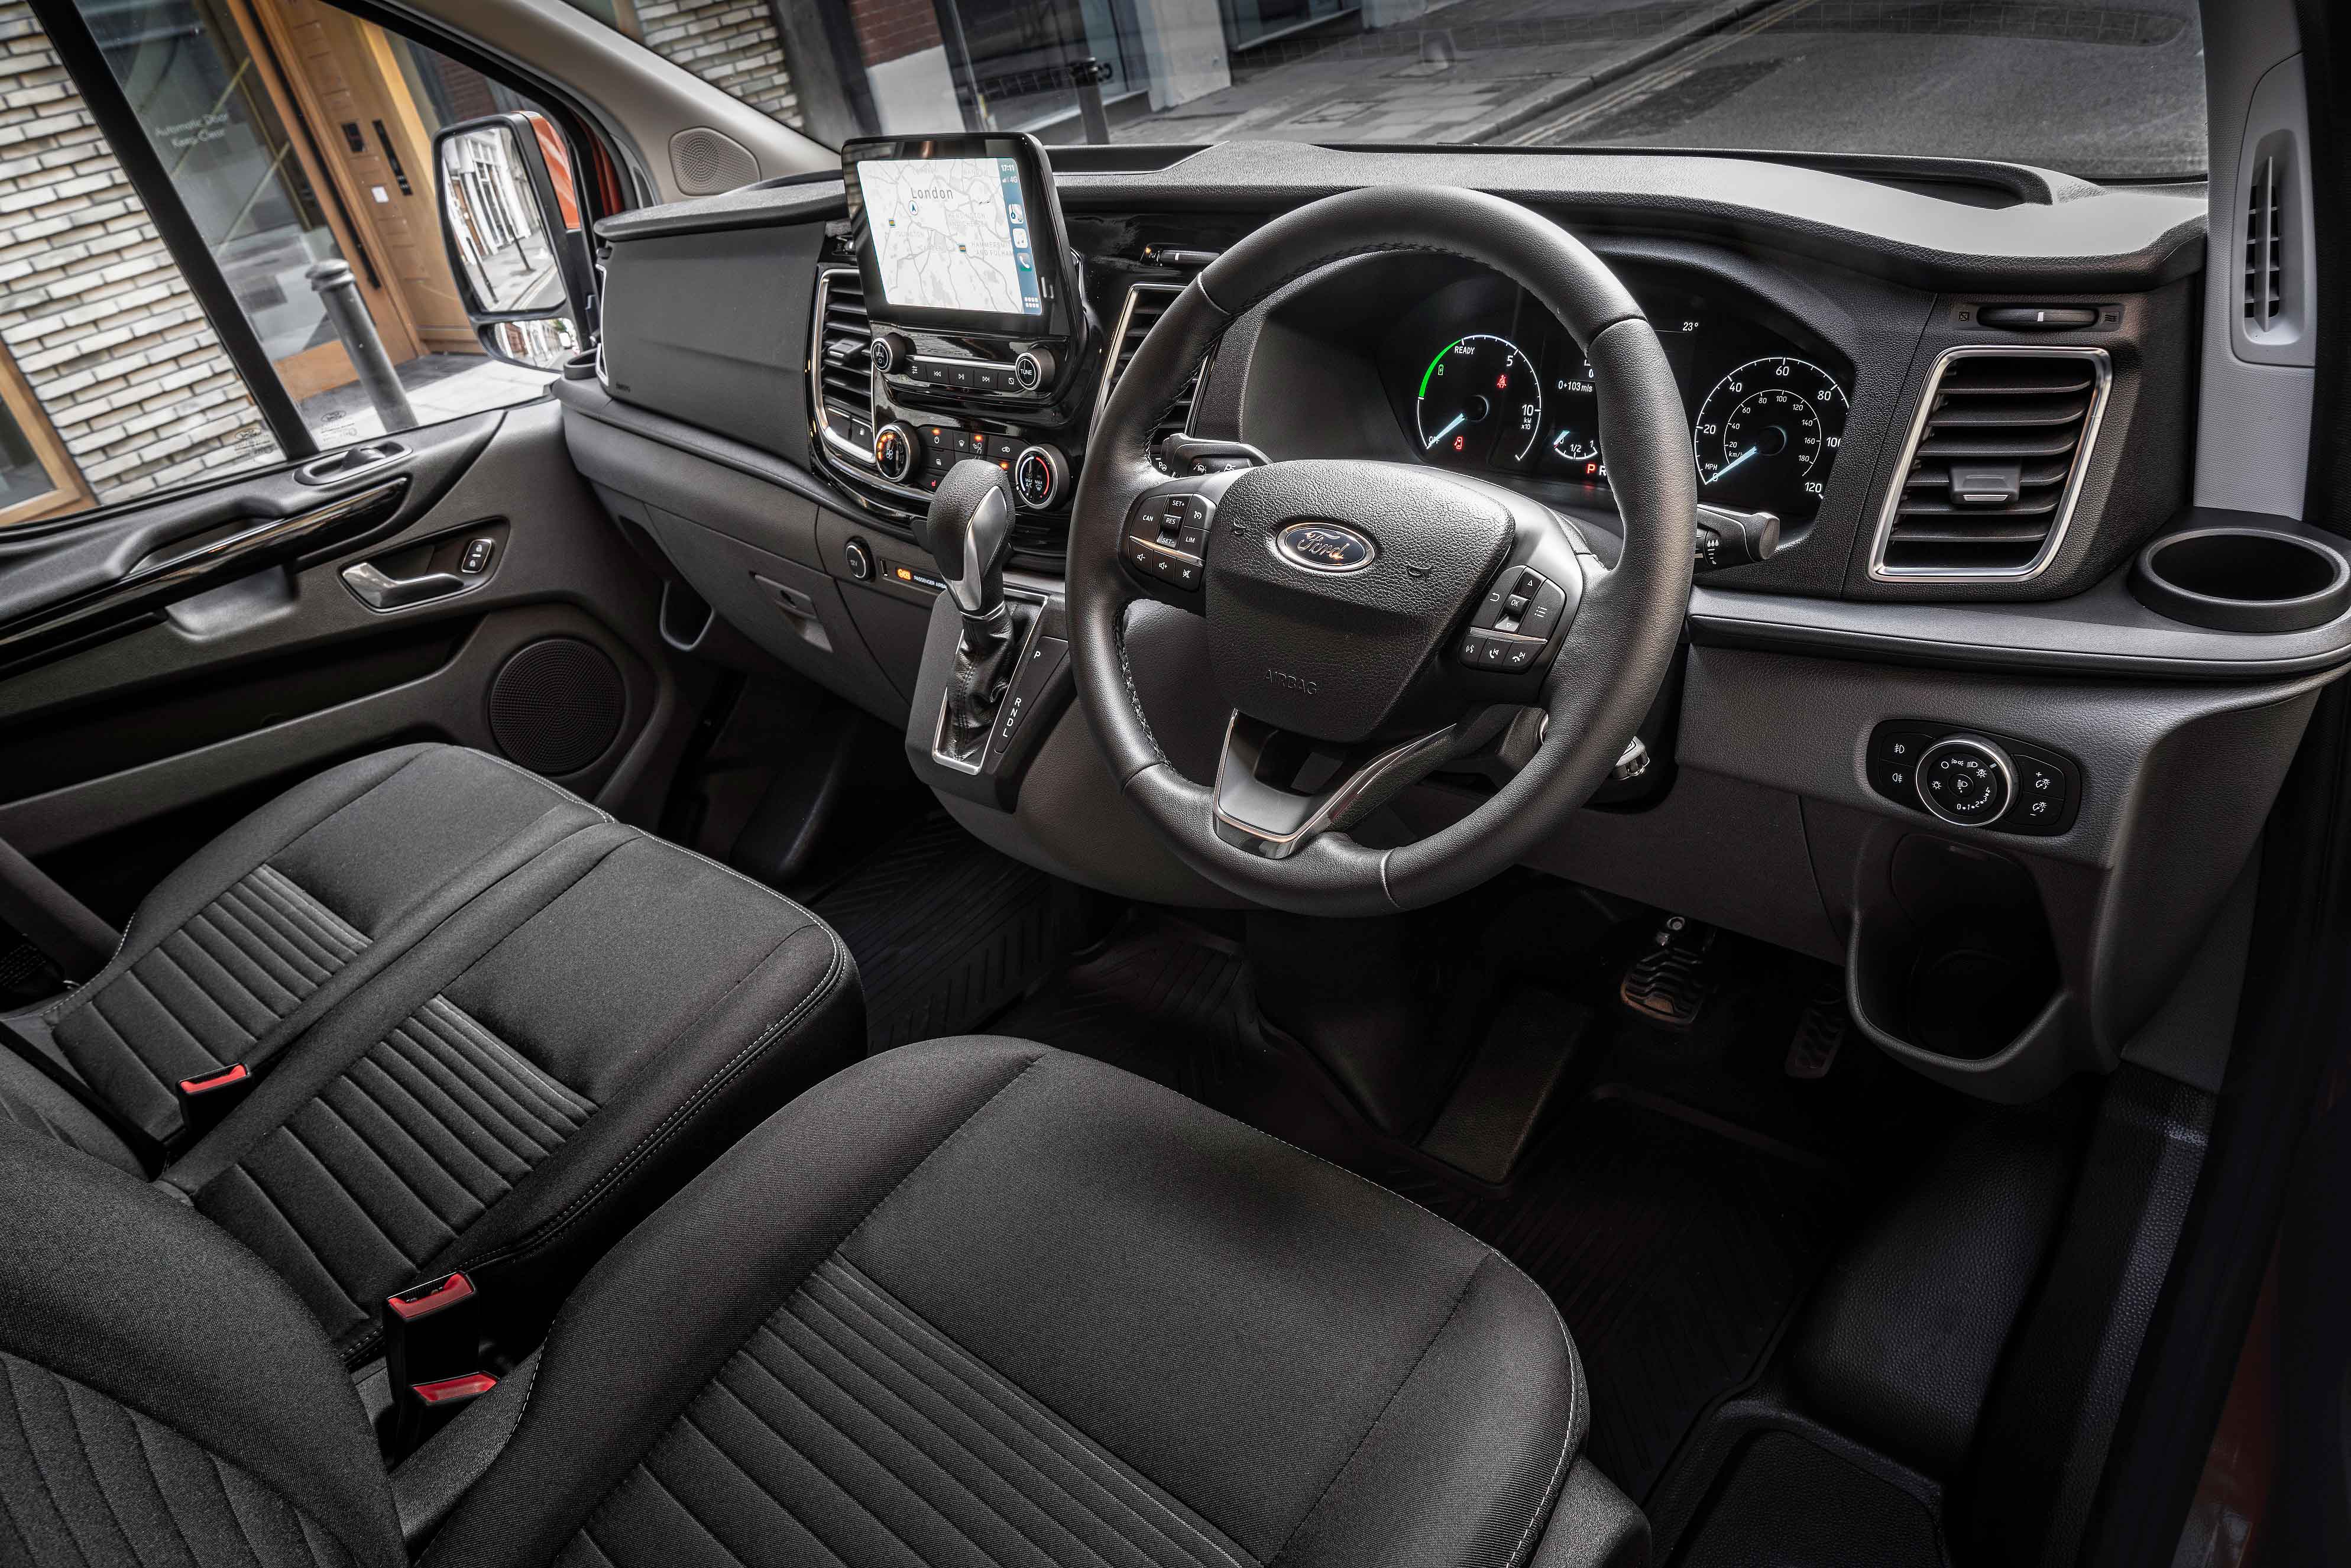 Ford Transit Custom hybrid interior & comfort DrivingElectric